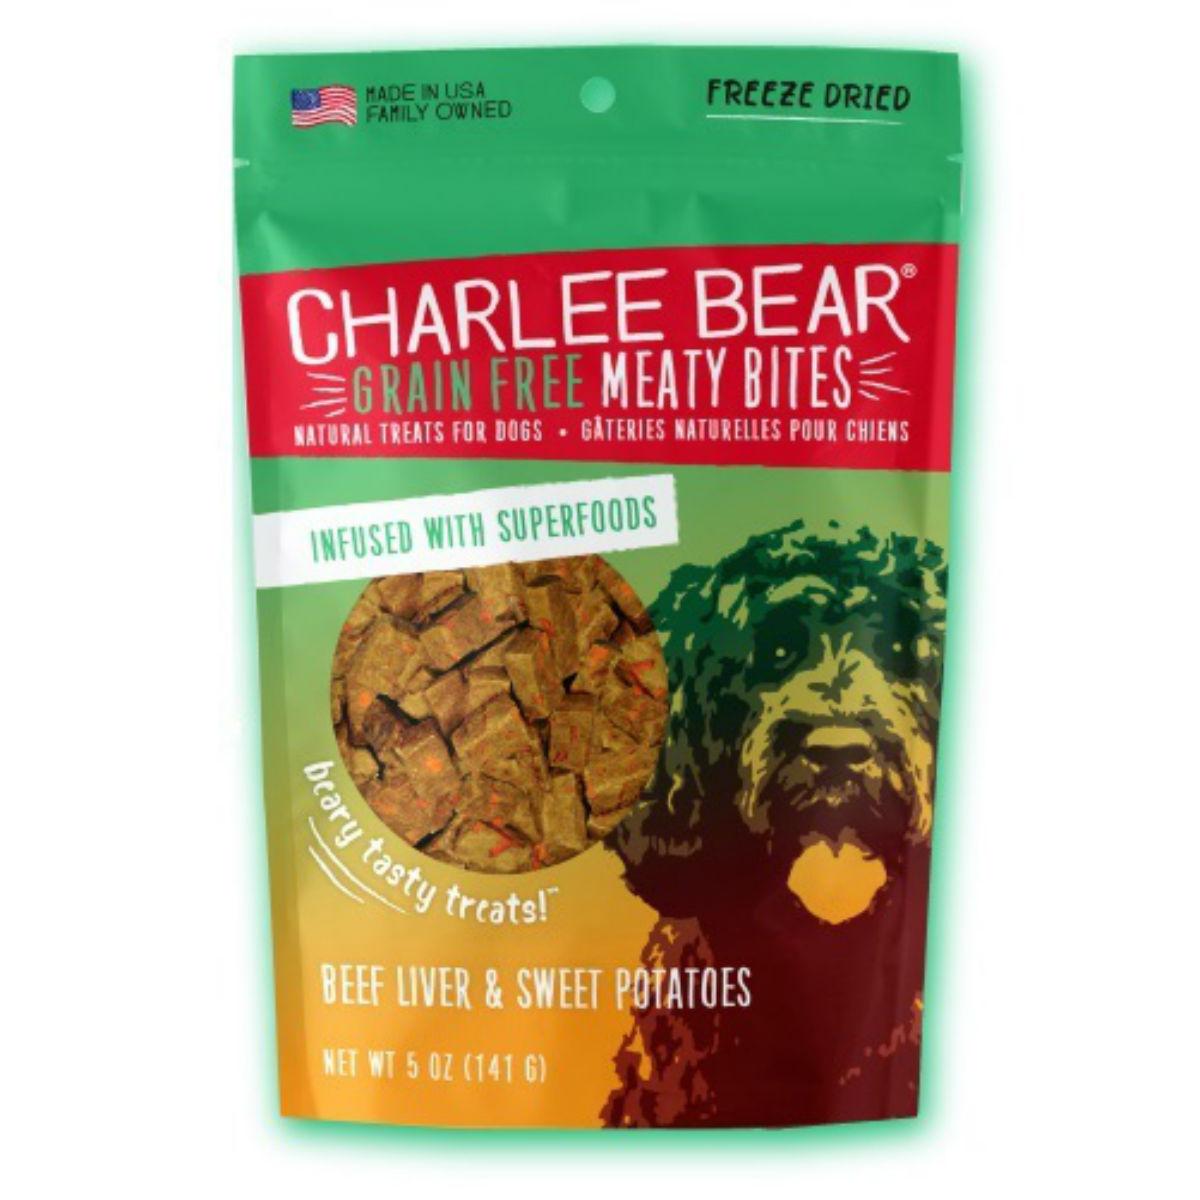 Charlee Bear Freeze Dried Meaty Bites Dog Treat - Beef Liver & Sweet Potatoes